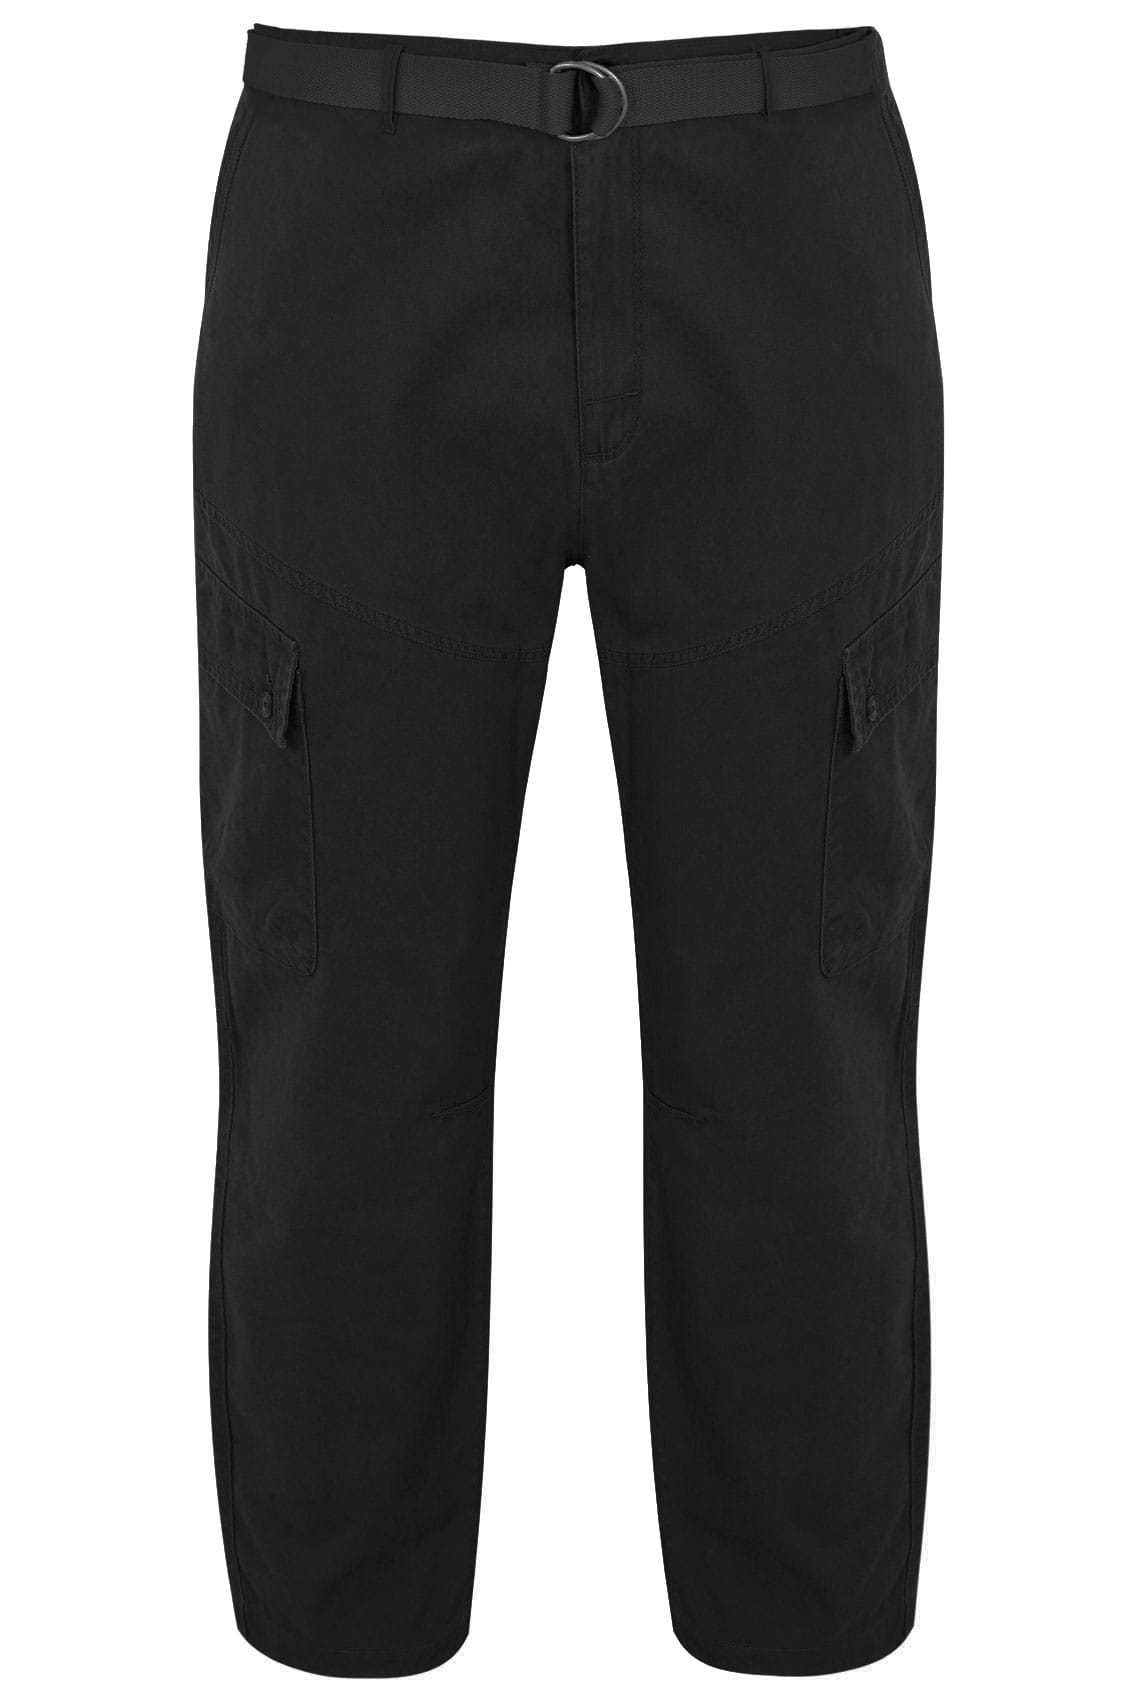 BadRhino Black Cargo Trousers With Utility Pockets & Canvas Belt_a7dd.jpg